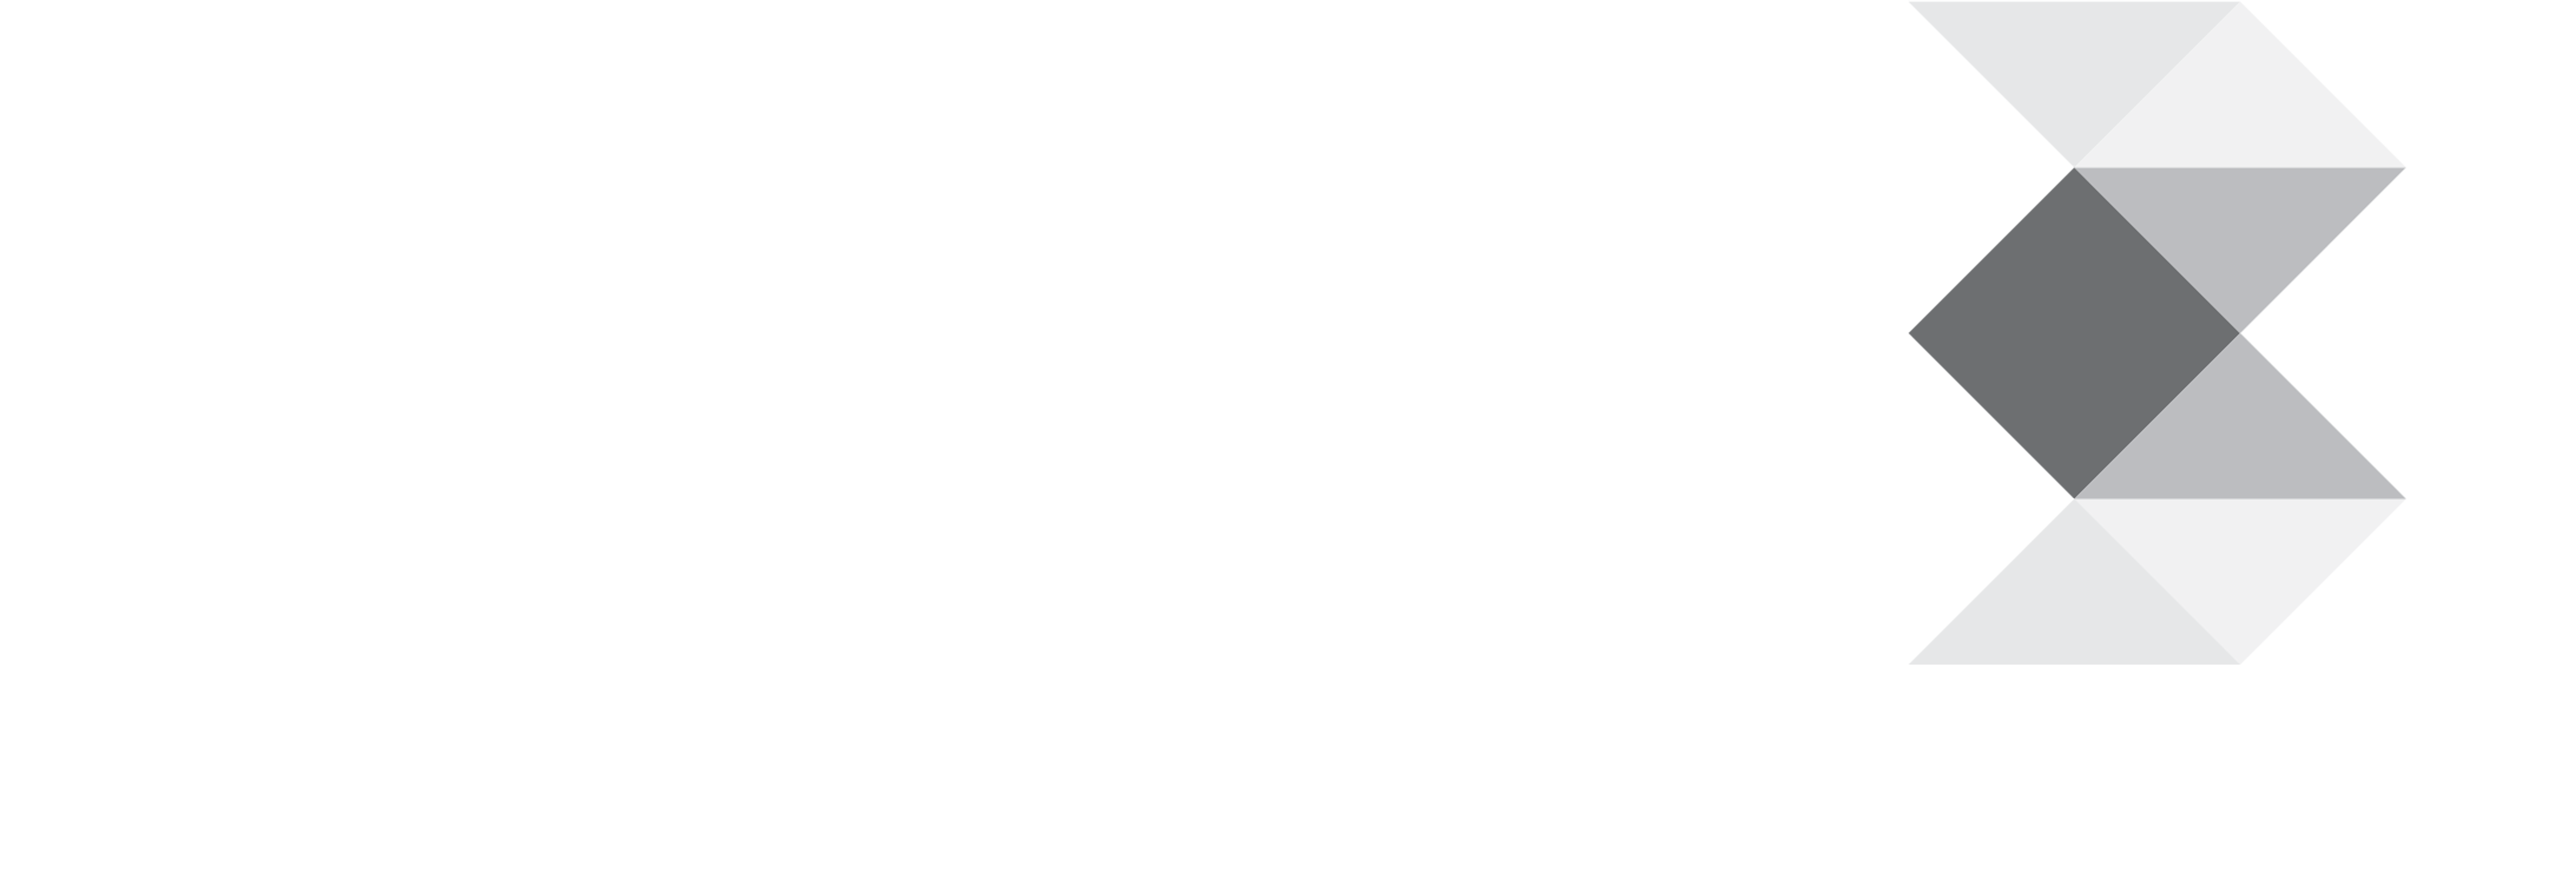 TPD - PPP - RGB Logo - White-1